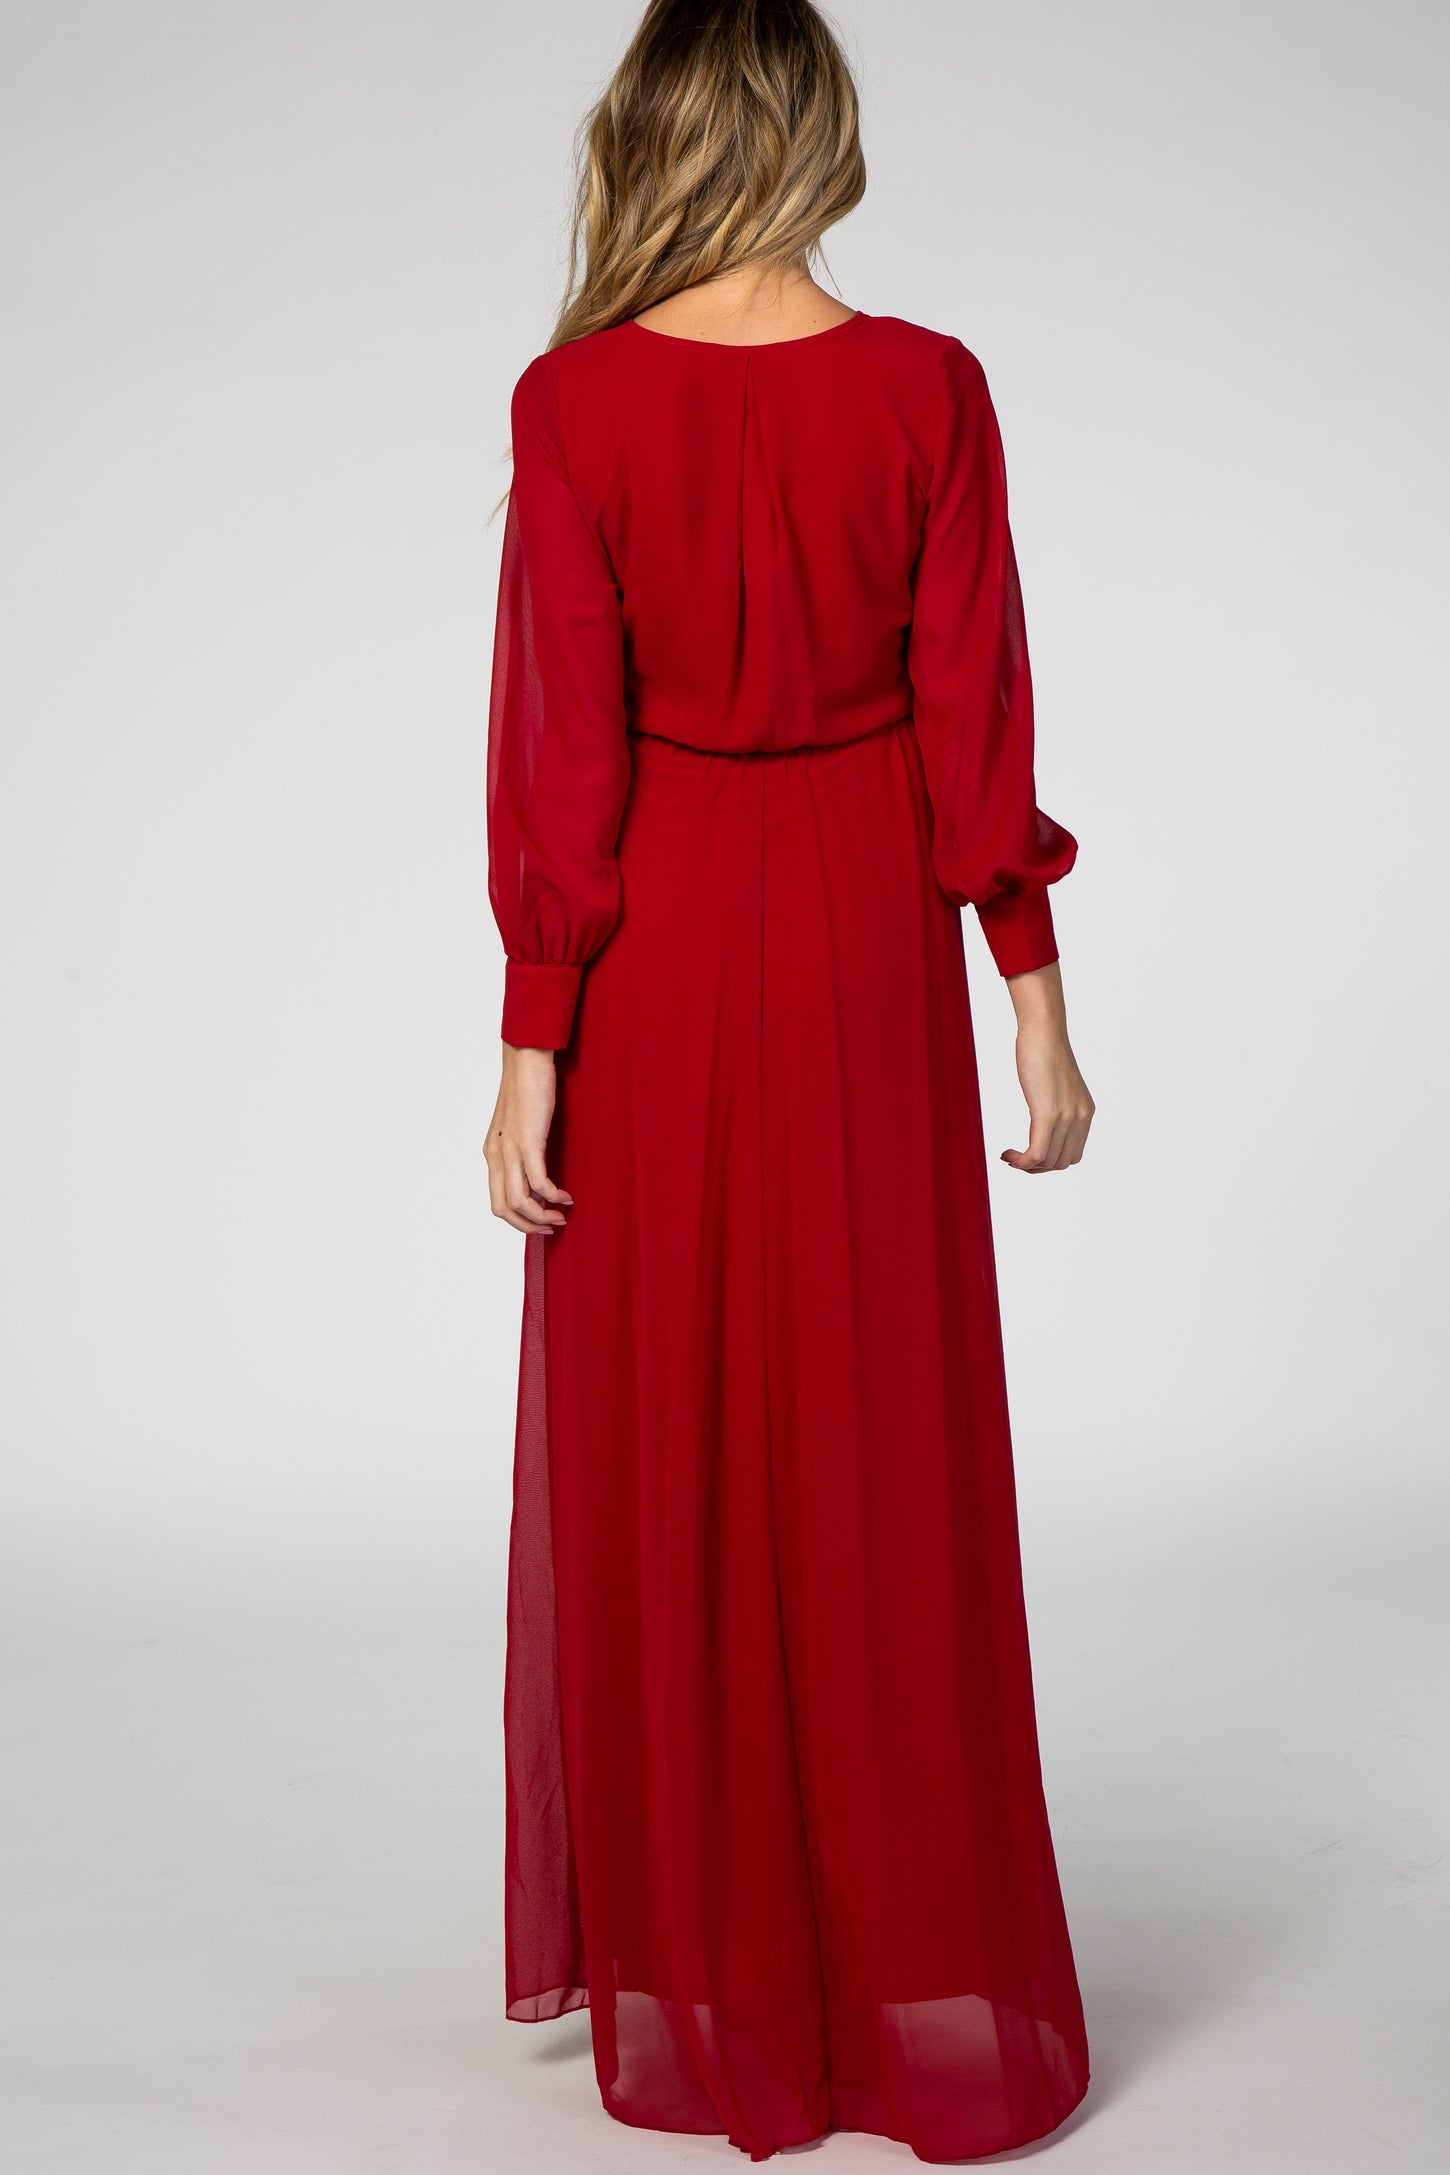 Red Chiffon Long Sleeve Pleated Maternity Maxi Dress